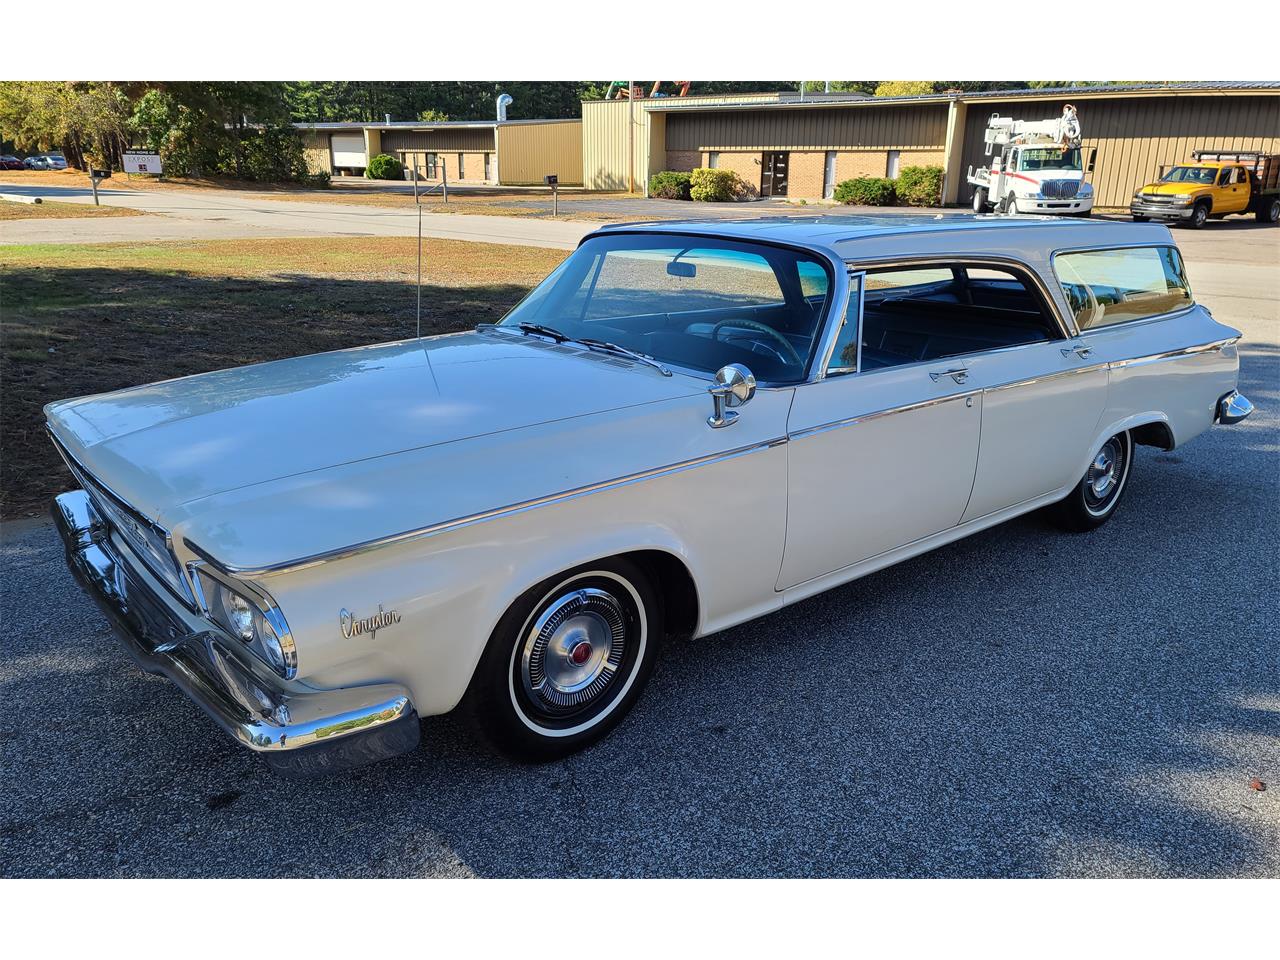 1964 Chrysler Newport for Sale | 0 | CC-1412660